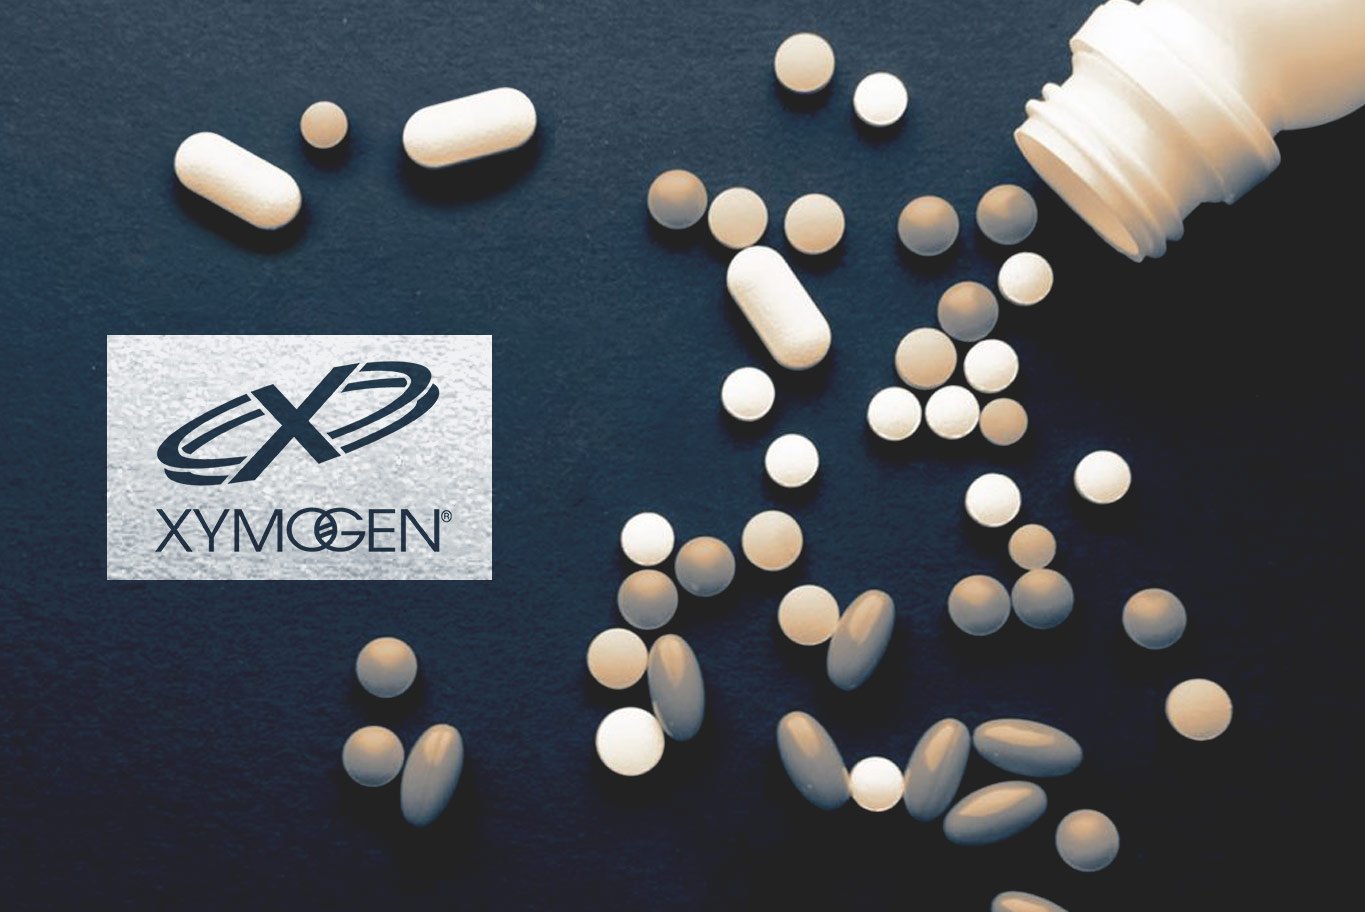 exymogen supplements logo banner optimus medica